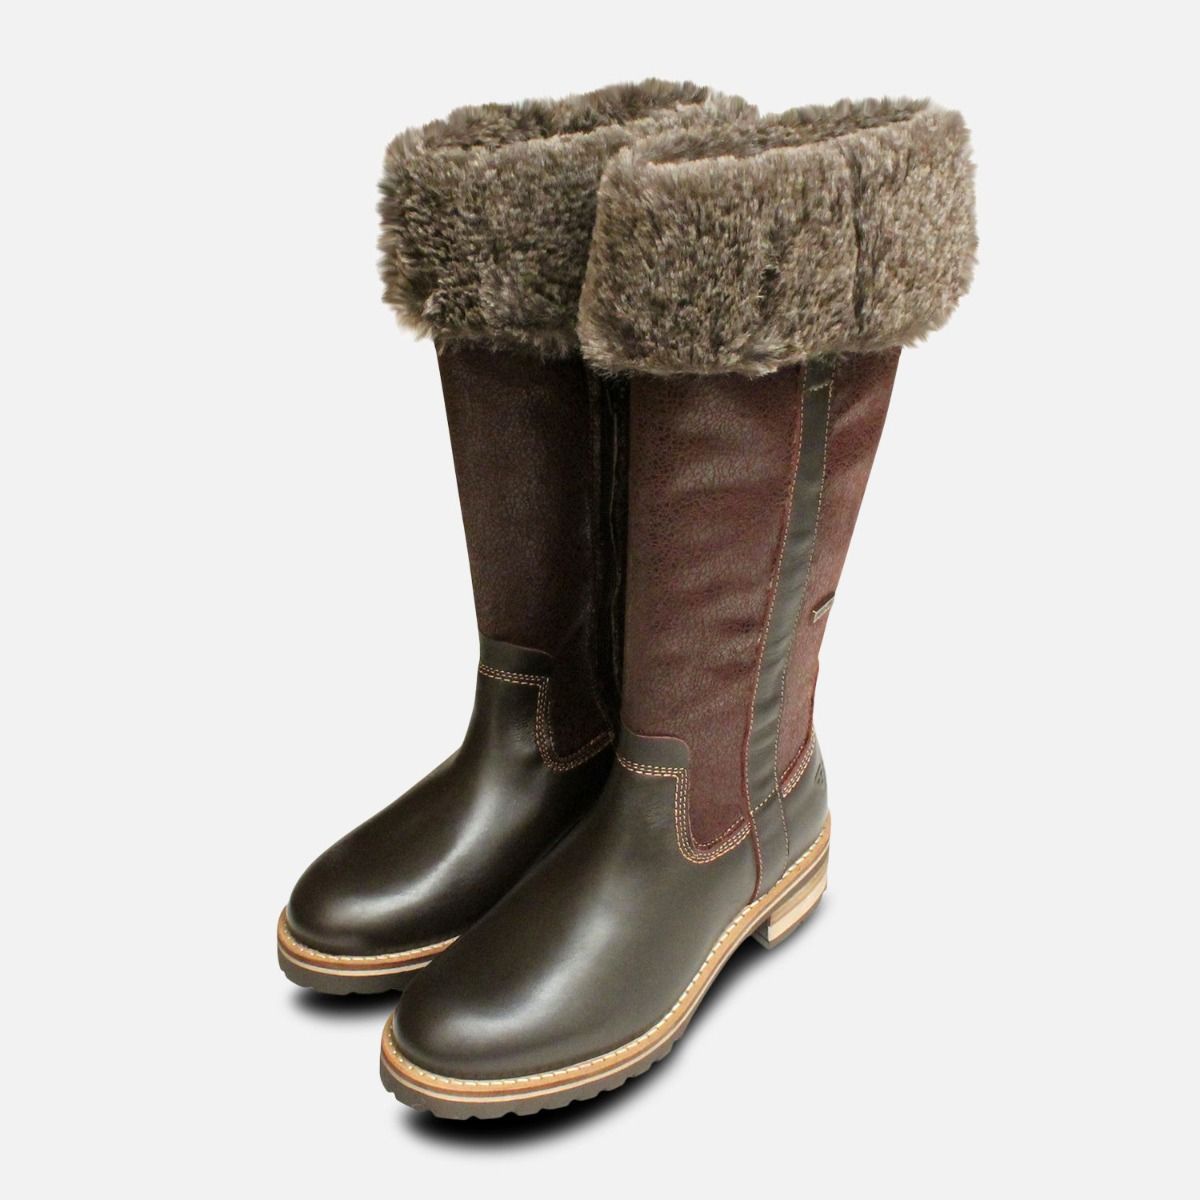 warm long boots